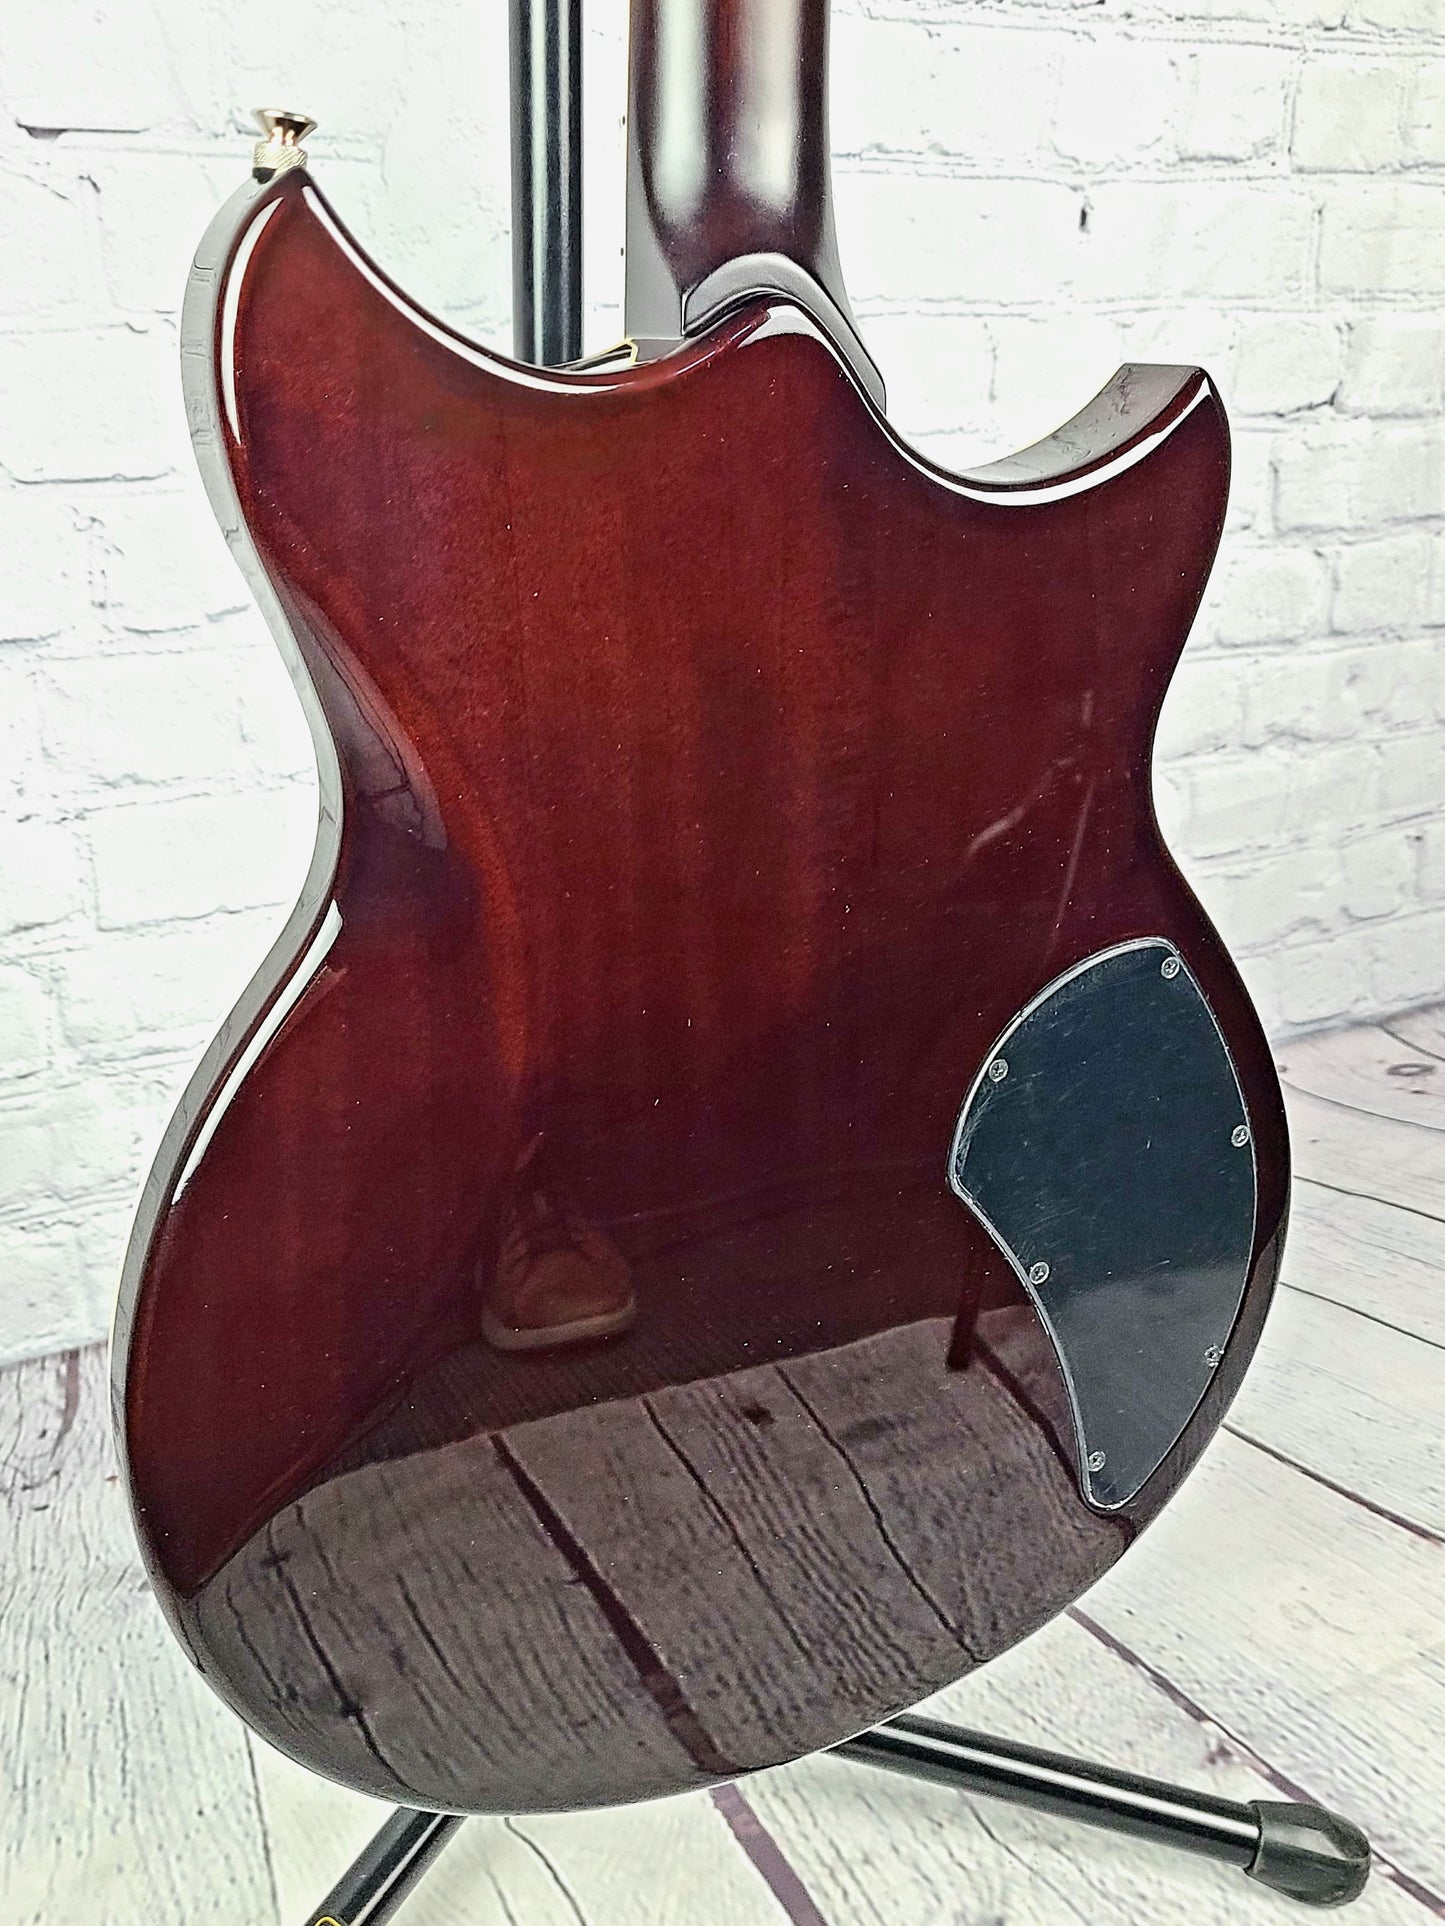 Yamaha Revstar II Standard RSS20L Swift Blue Left Handed Electric Guitar